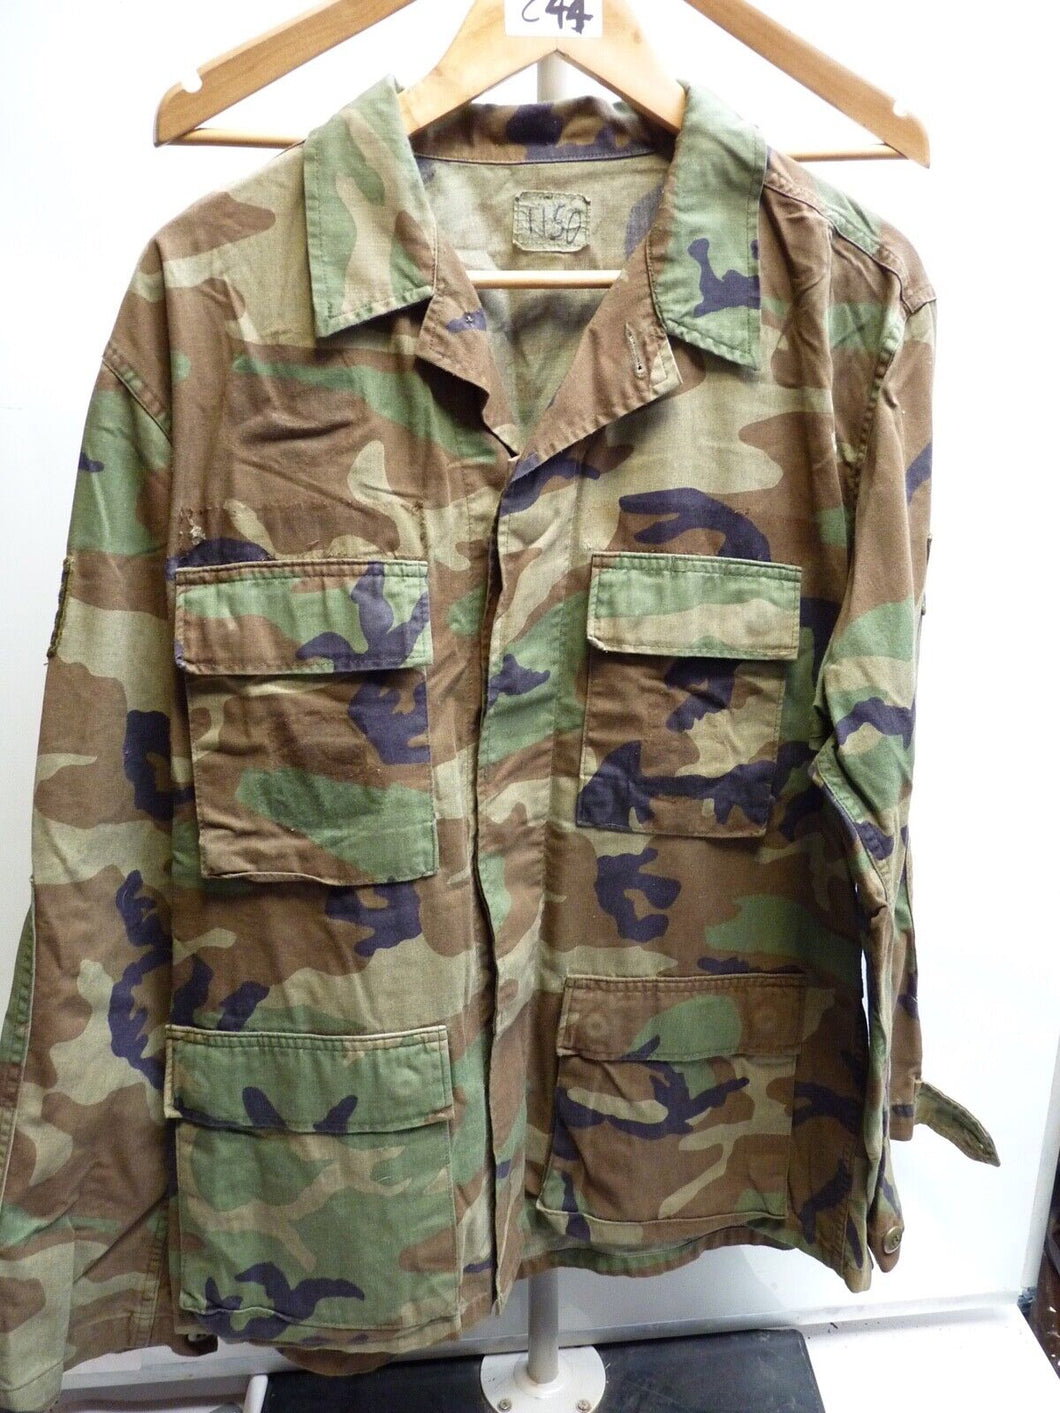 Genuine US Army Camouflaged BDU Battledress Uniform - 37 to 41 Inch Chest